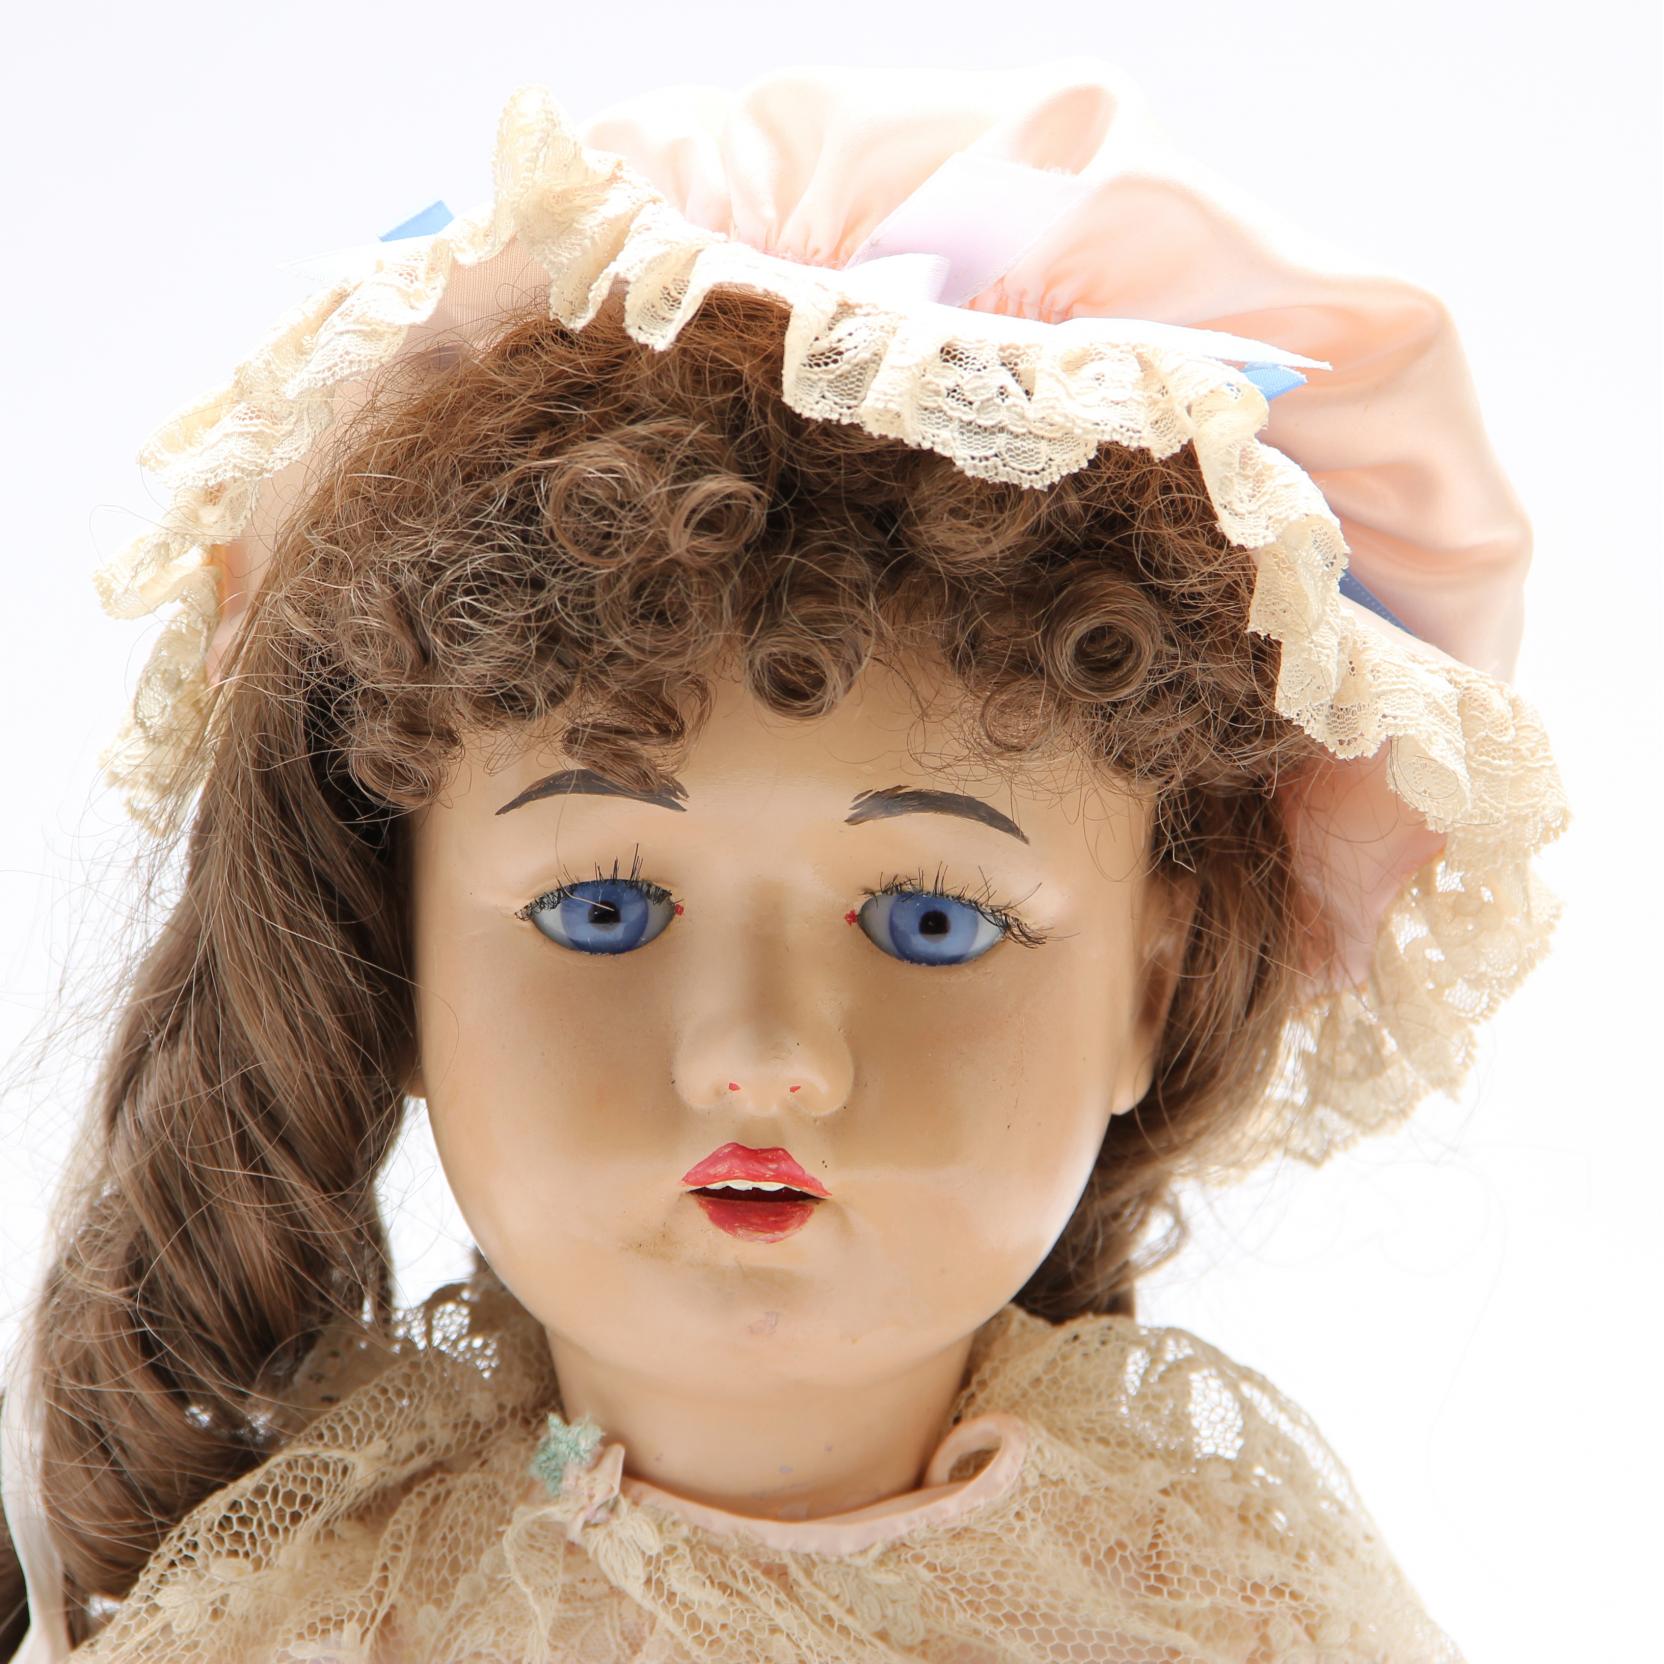 Antique Max Oscar Arnold (MOA) 200 for Welsch Antique Doll (Lot 